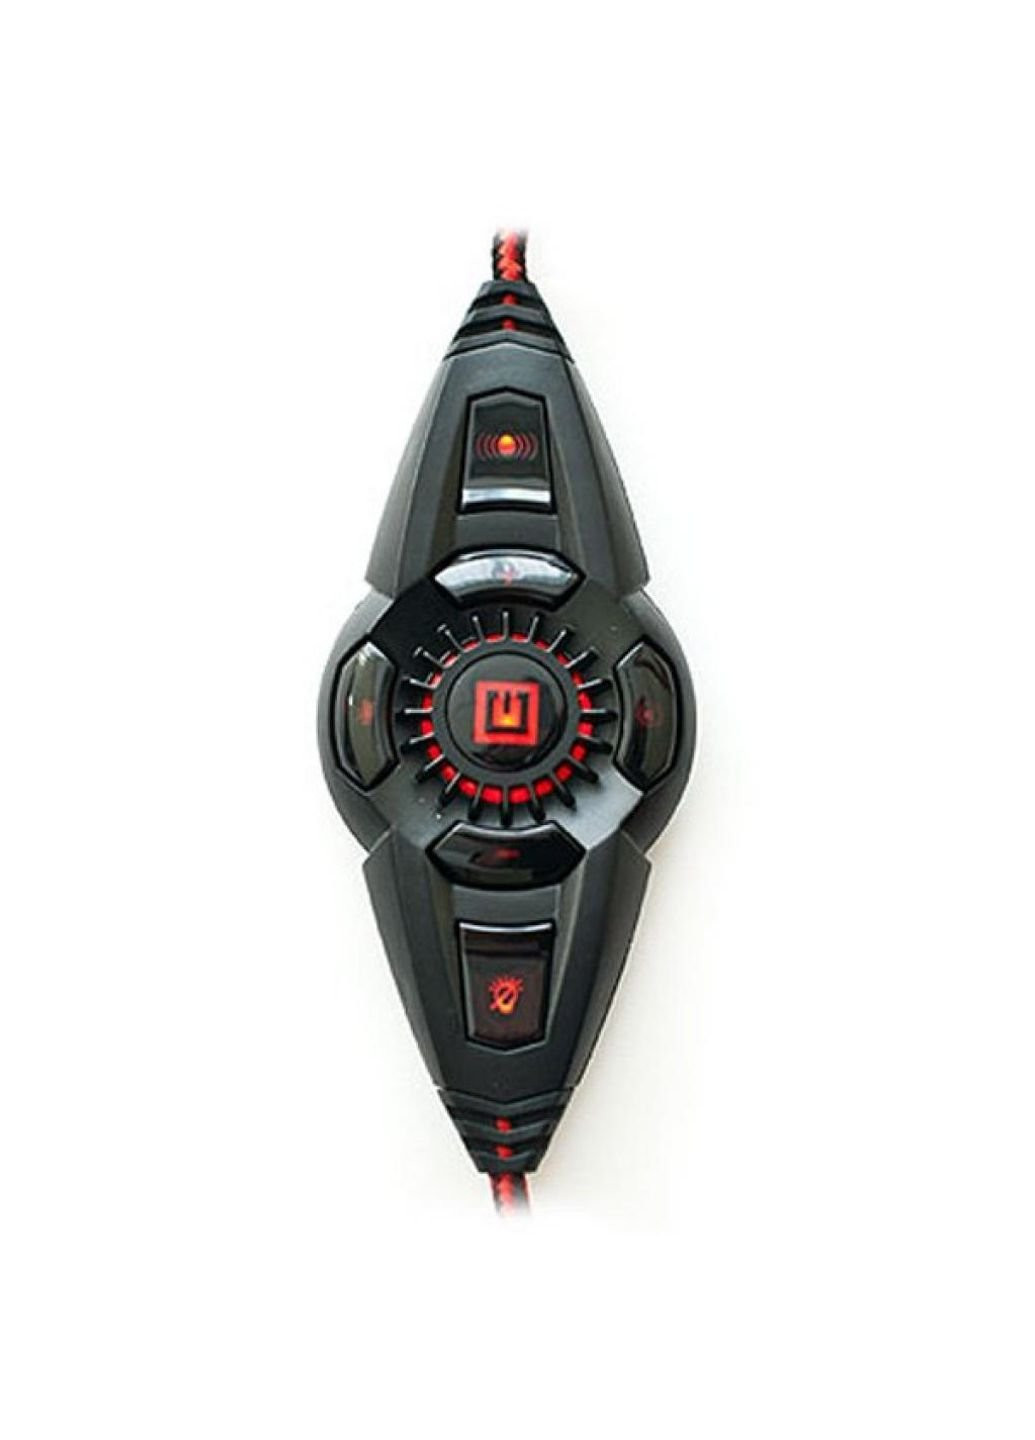 Наушники Real-El gdx-8000 vibration surround 7.1 backlit (250310062)